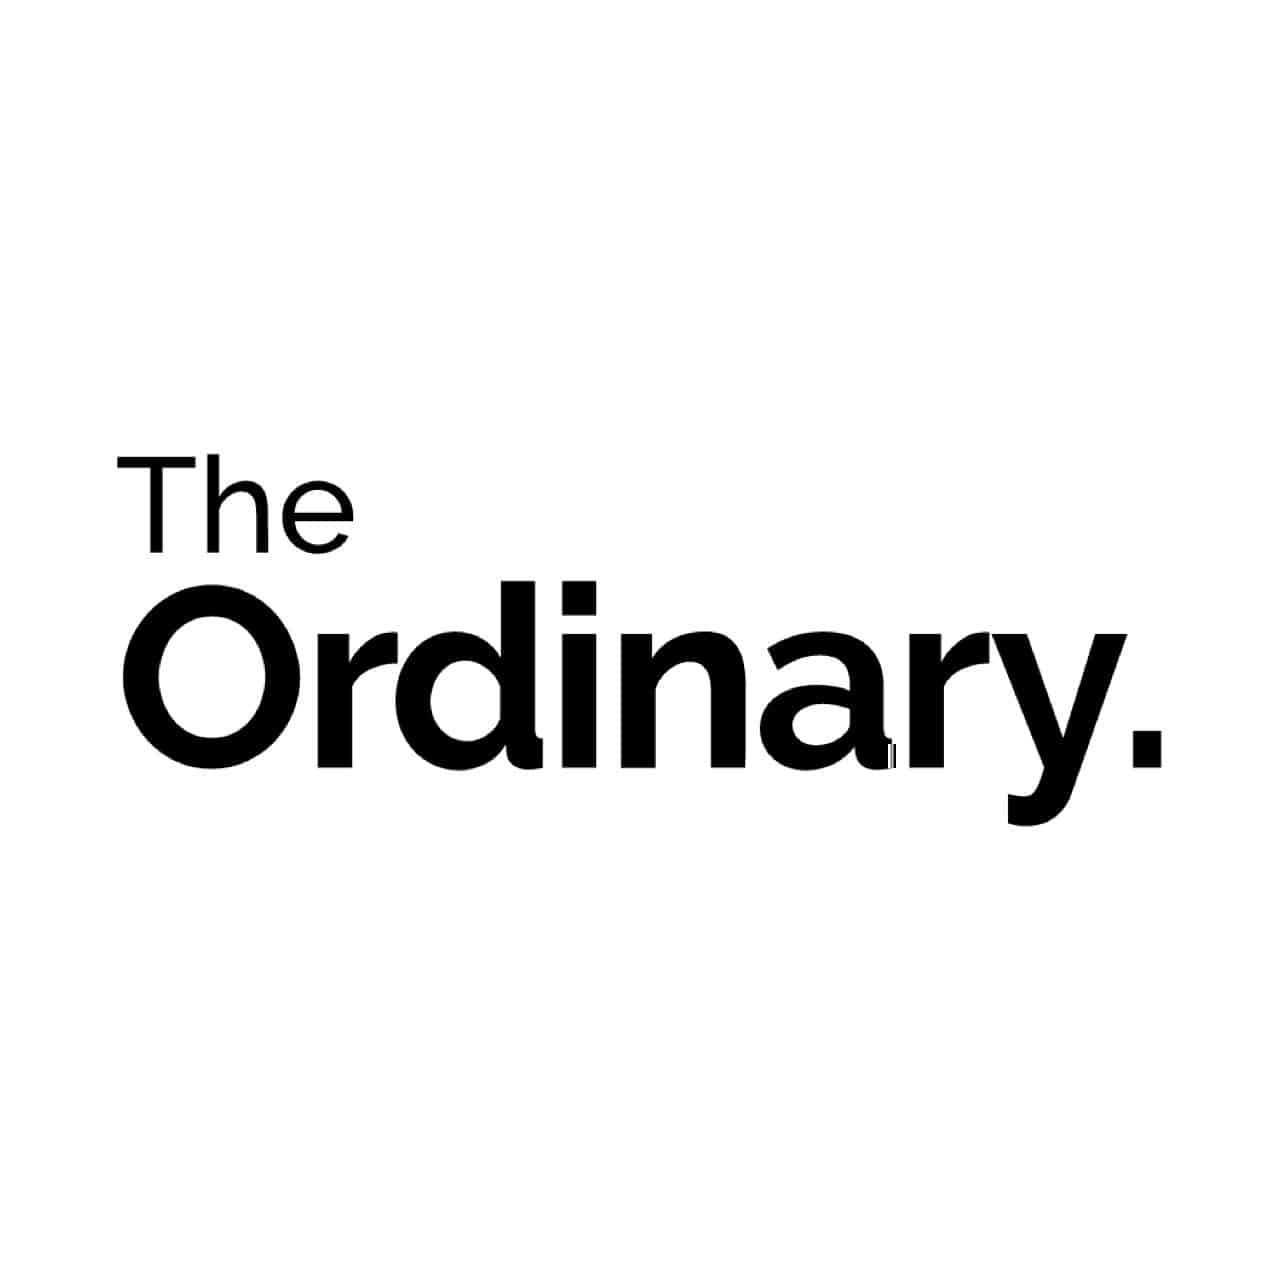 the-ordinary-thiqa-lab-brand.001